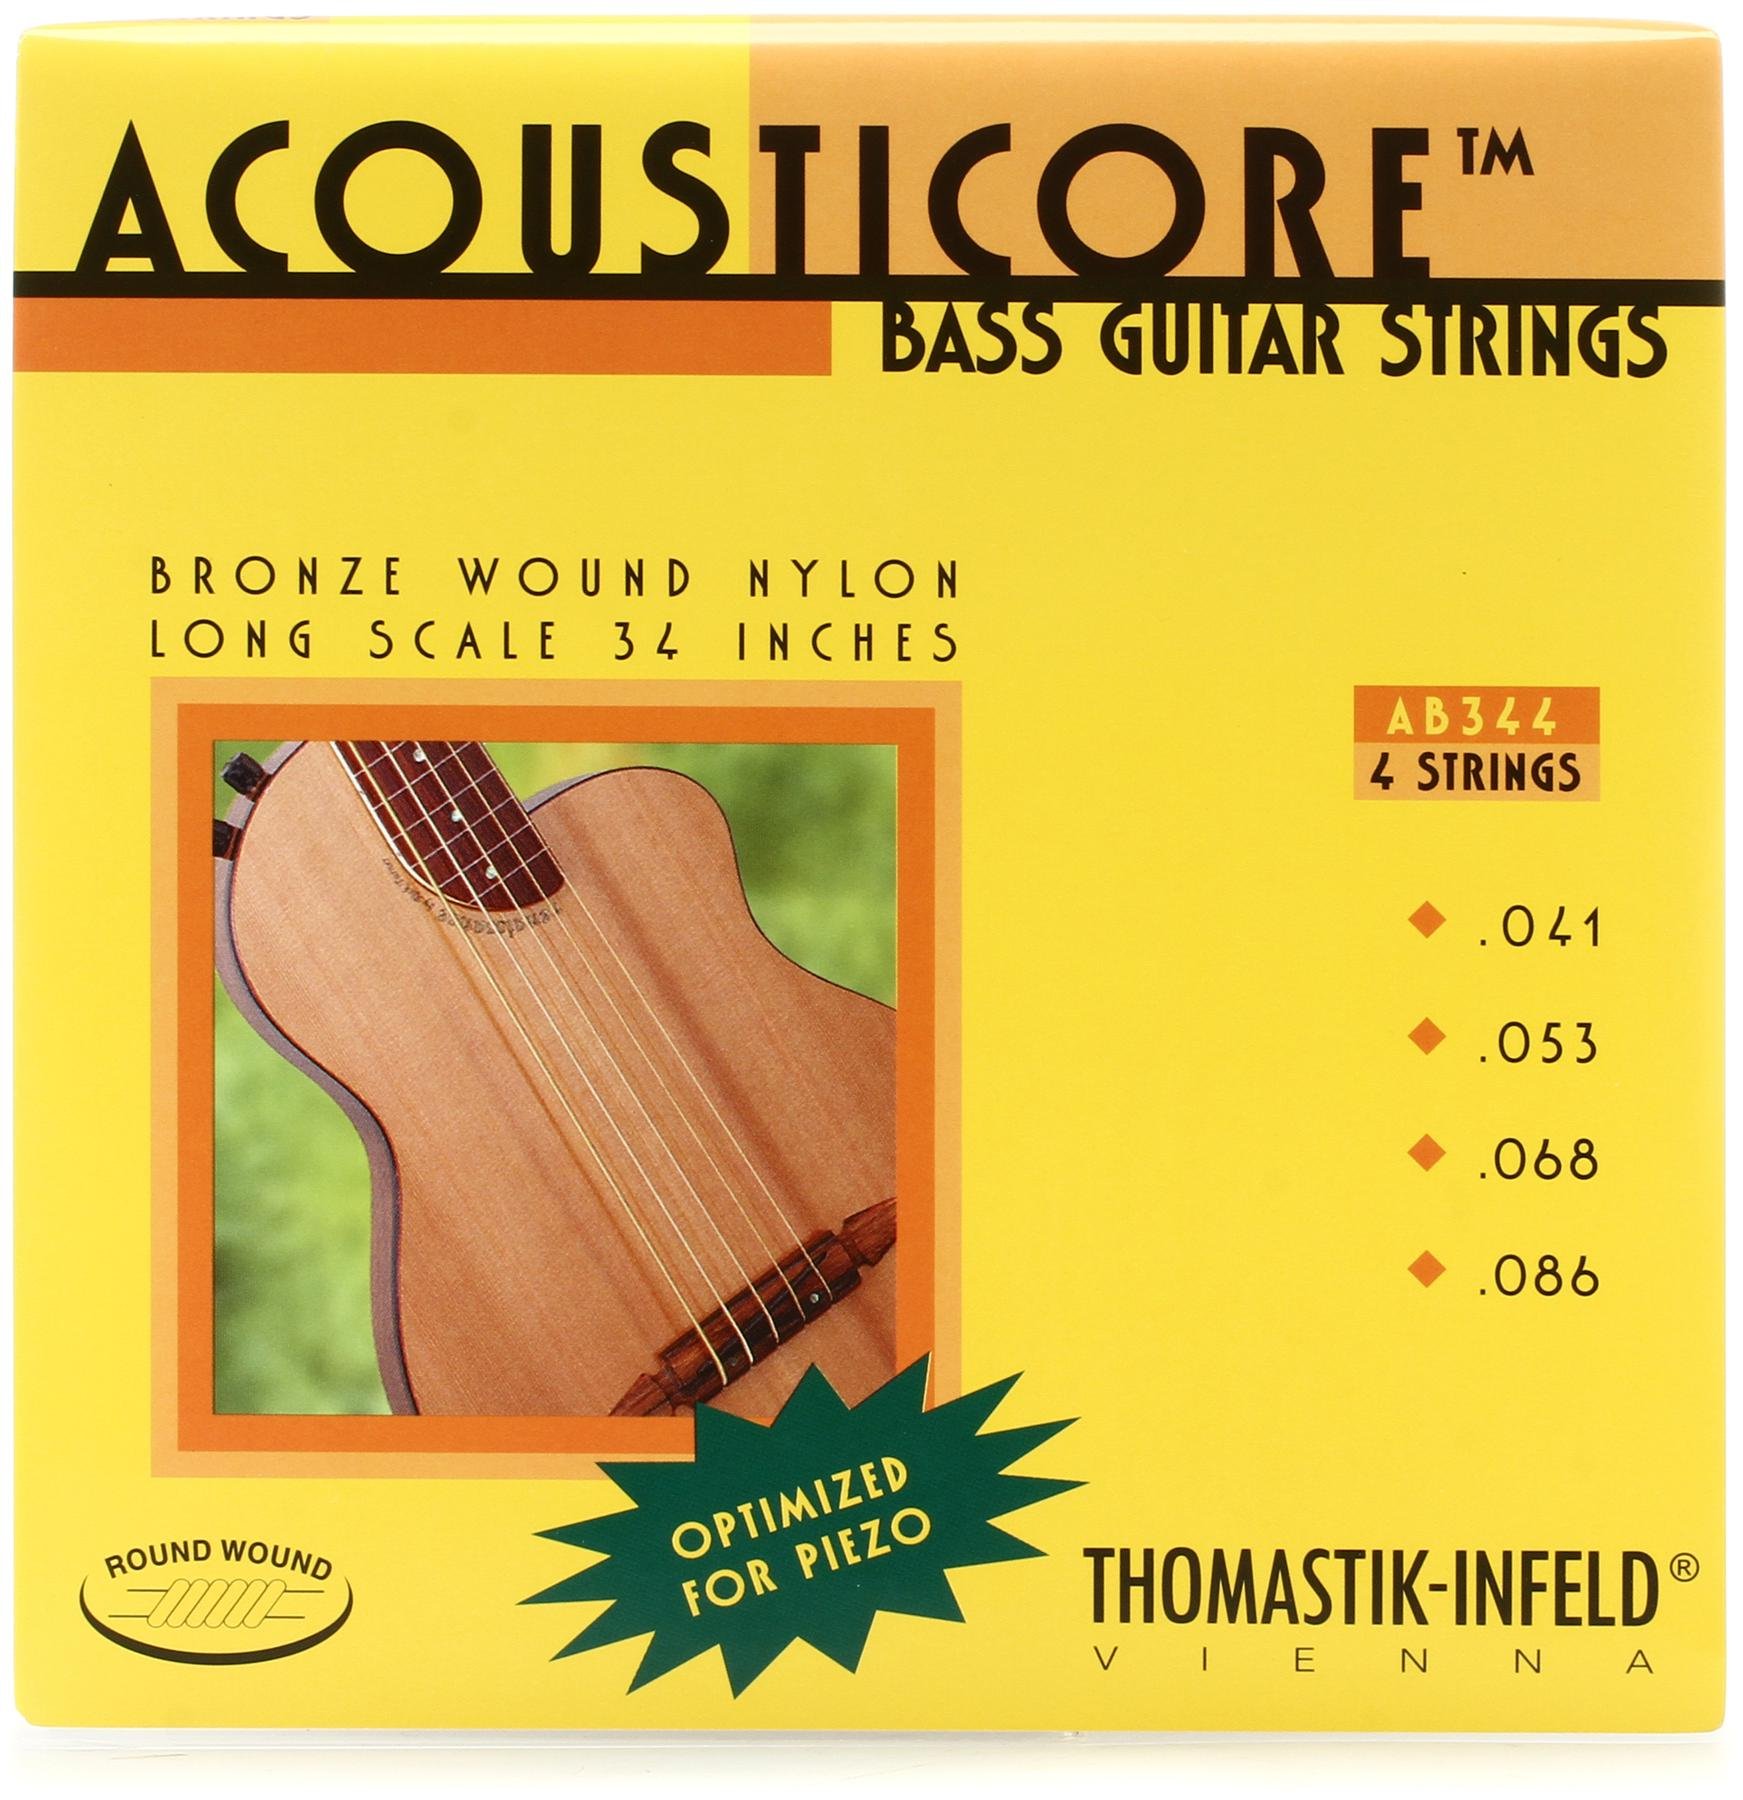 Thomastik-Infeld AB344 Acousticore Acoustic Bass Guitar Strings 